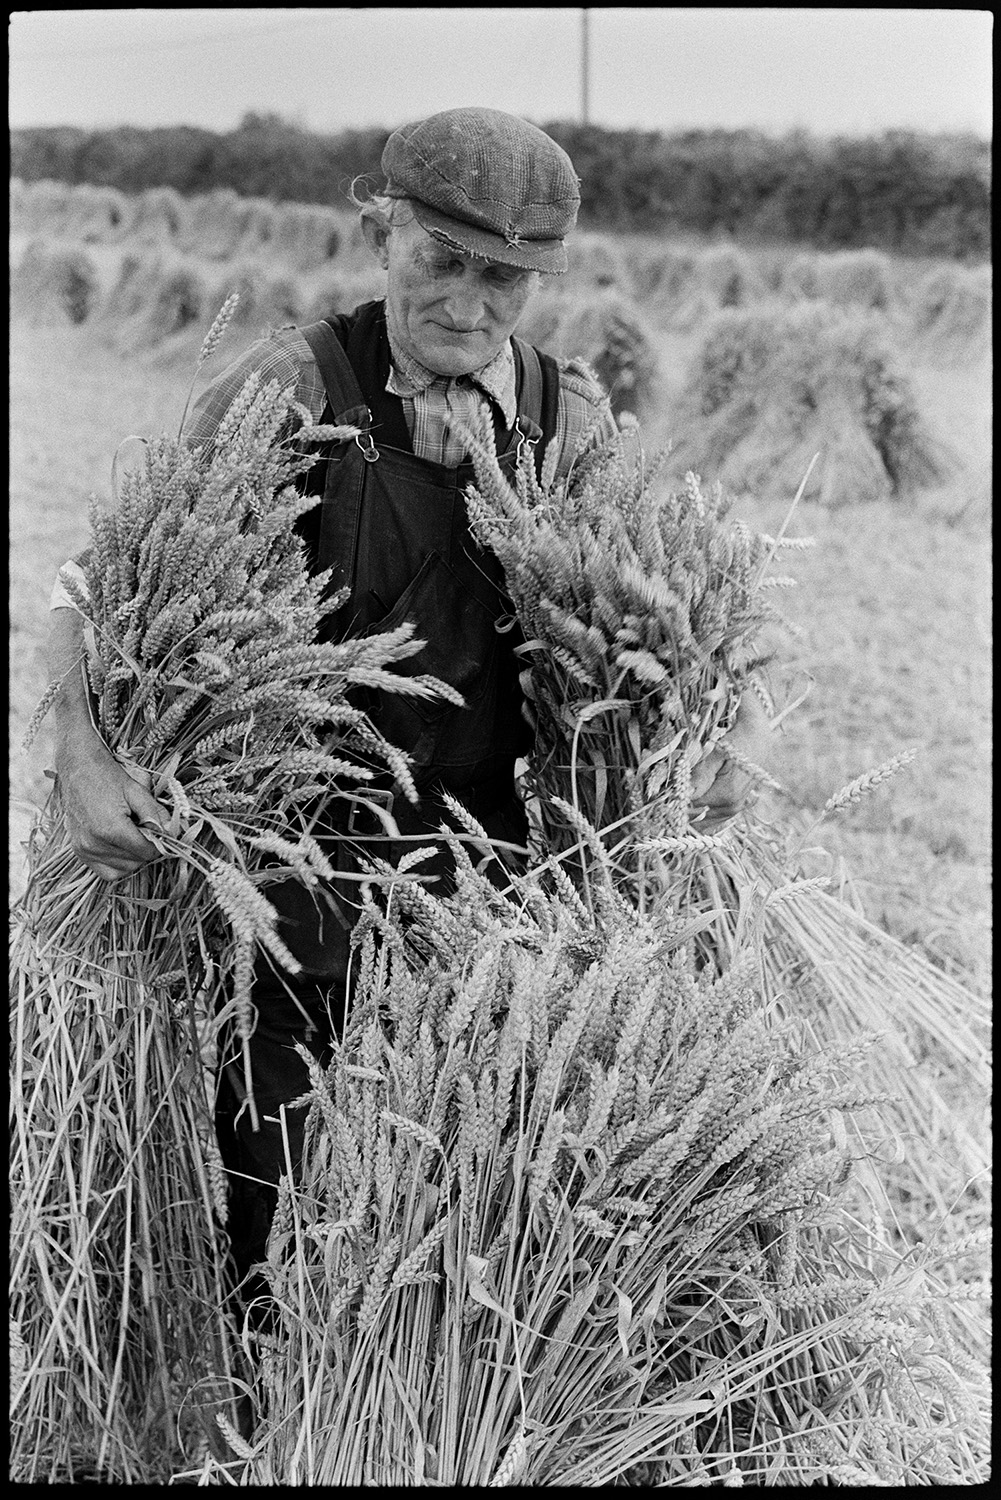 Farmers setting up stooks of corn. 
[Gordon Sanders setting up stooks of corn in a field at Densham, Ashreigney. He is carrying two bundles of corn.]